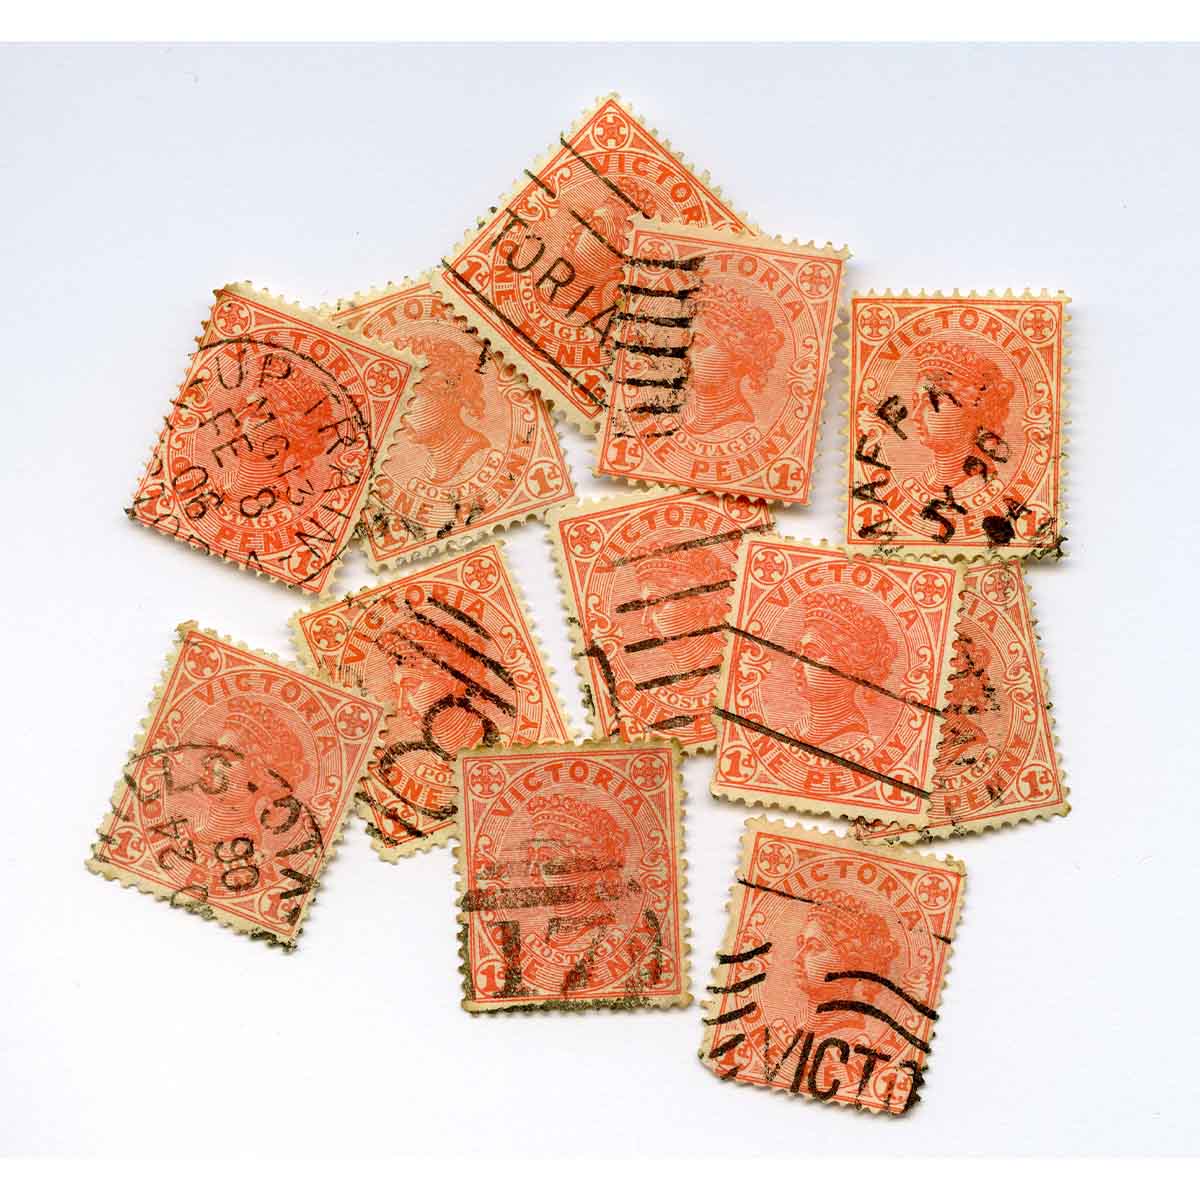 Victorian Colonial Era Stamp